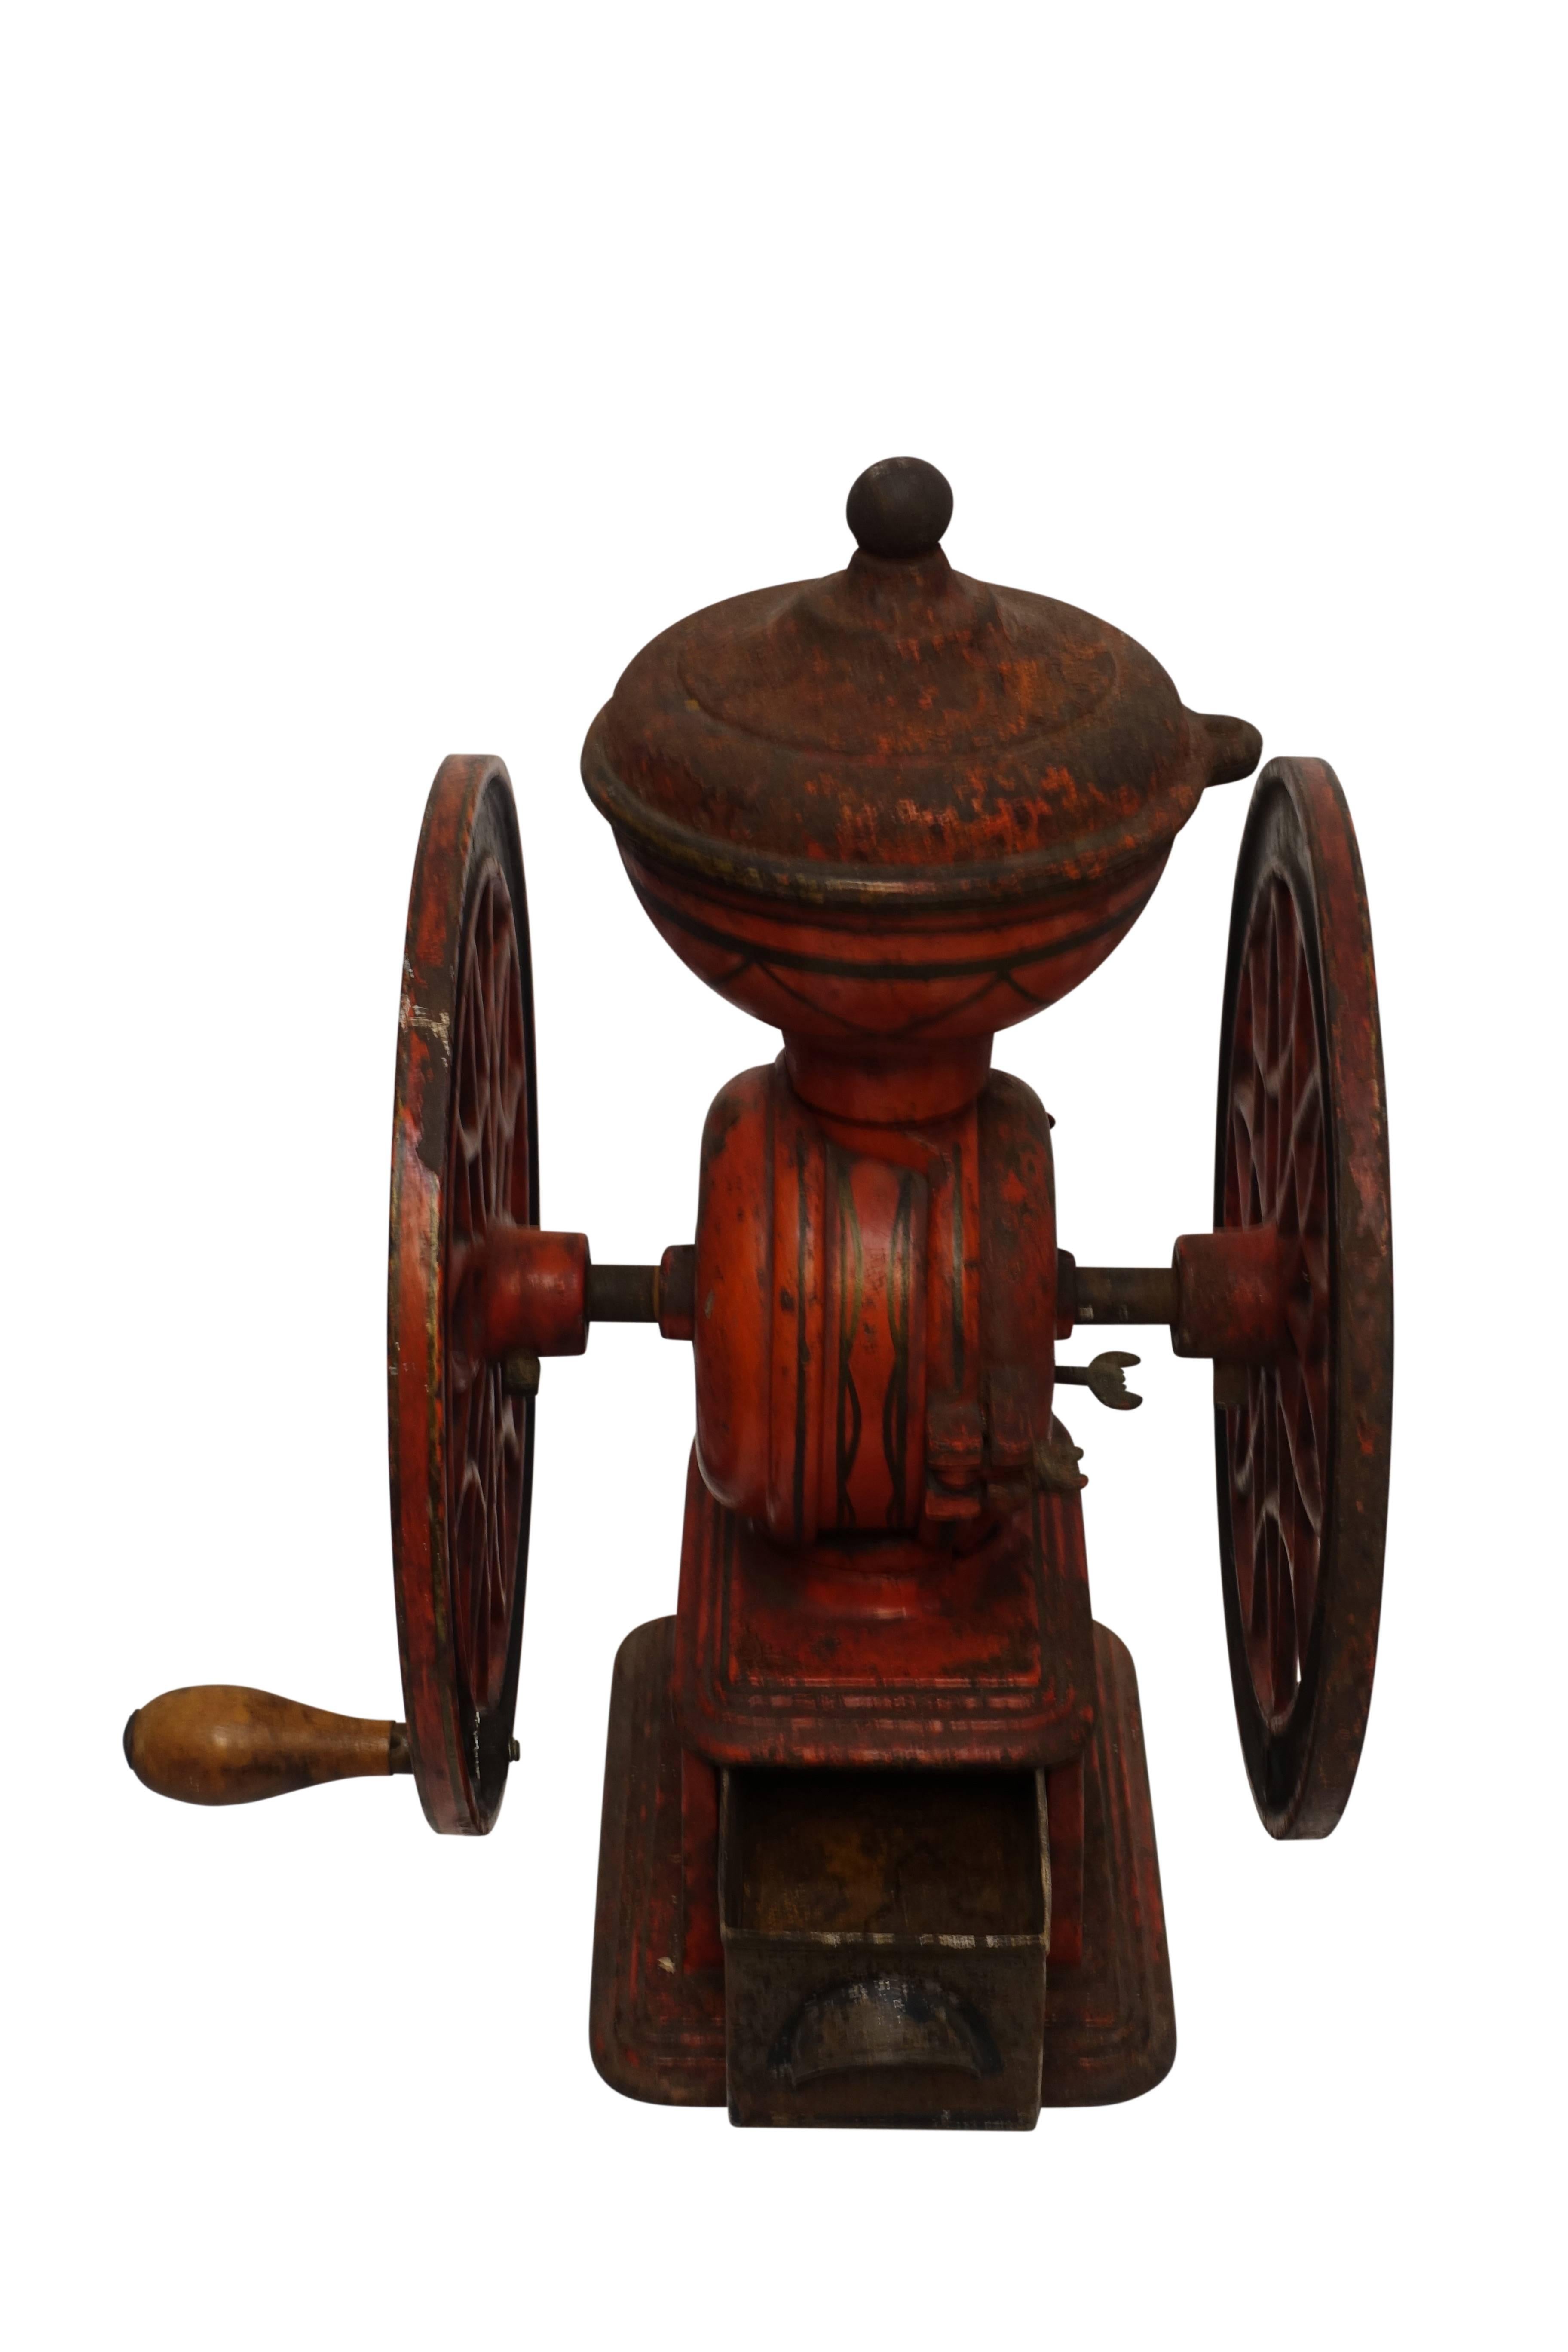 Antique Coffee Grinder, American, 19th Century 1